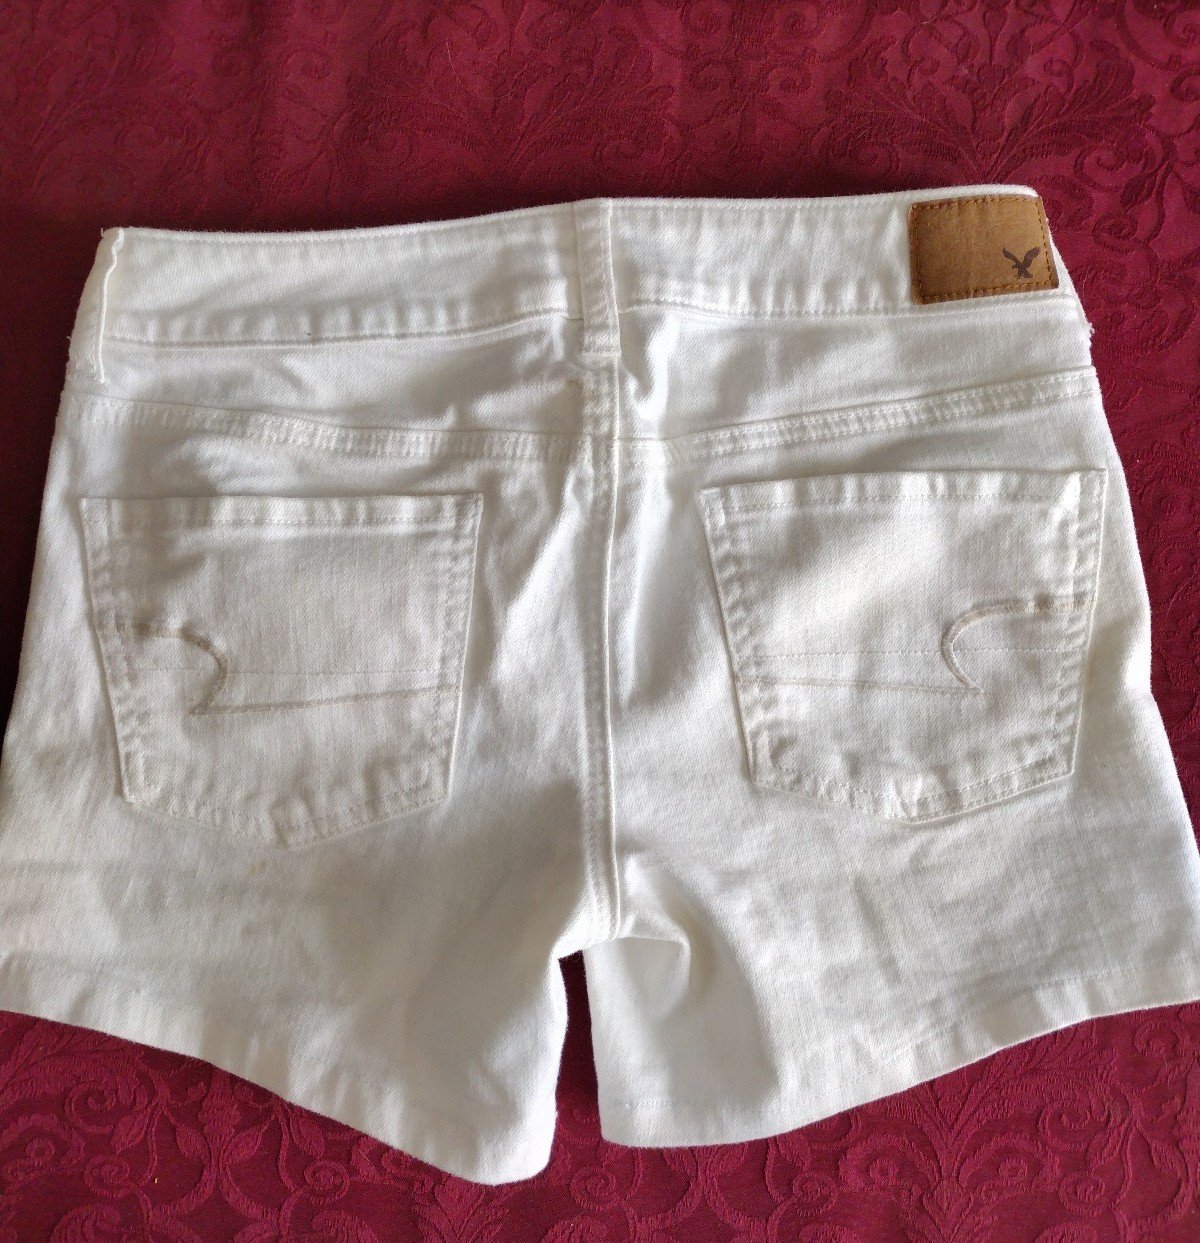 High quality American Eagle denim shorts. Size 4 nzQx2Ok4X Outlet Store